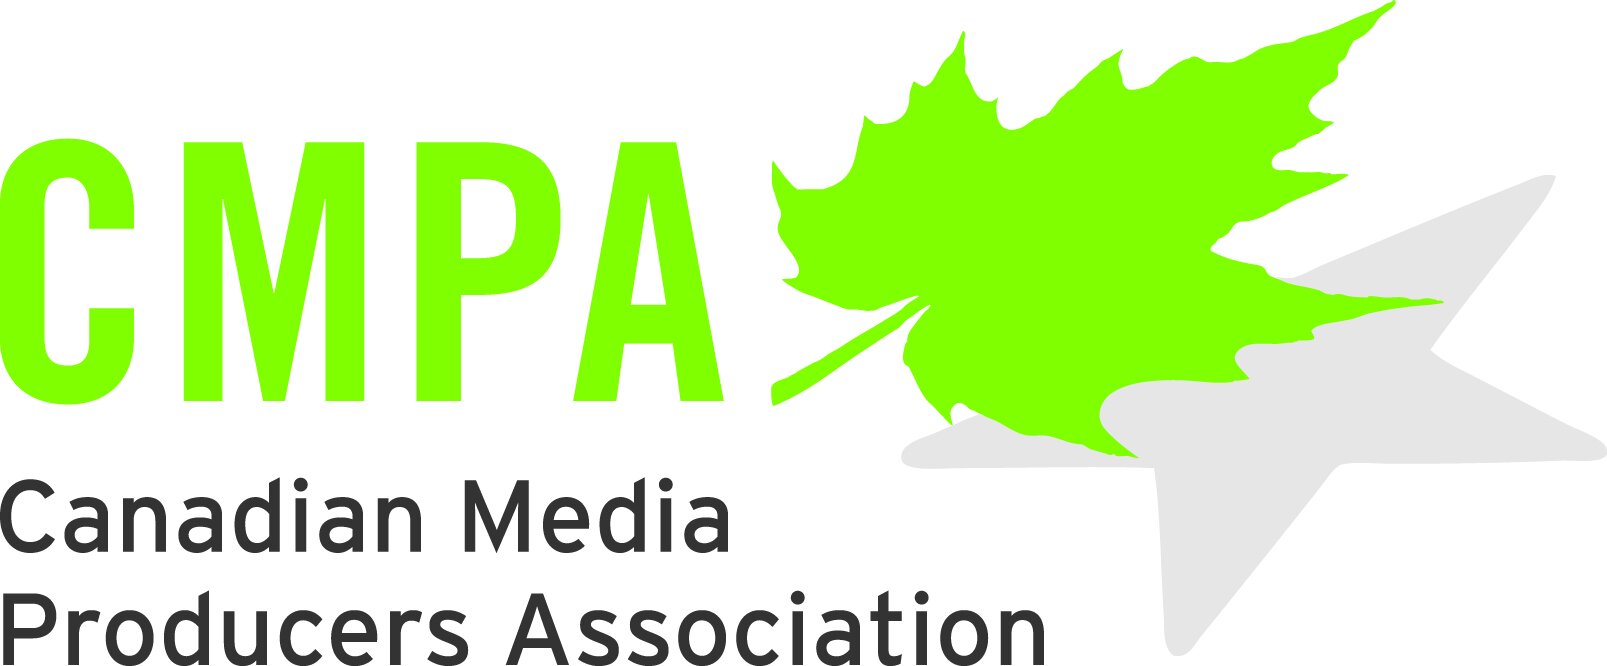 CMPA_logo2015_col.jpg